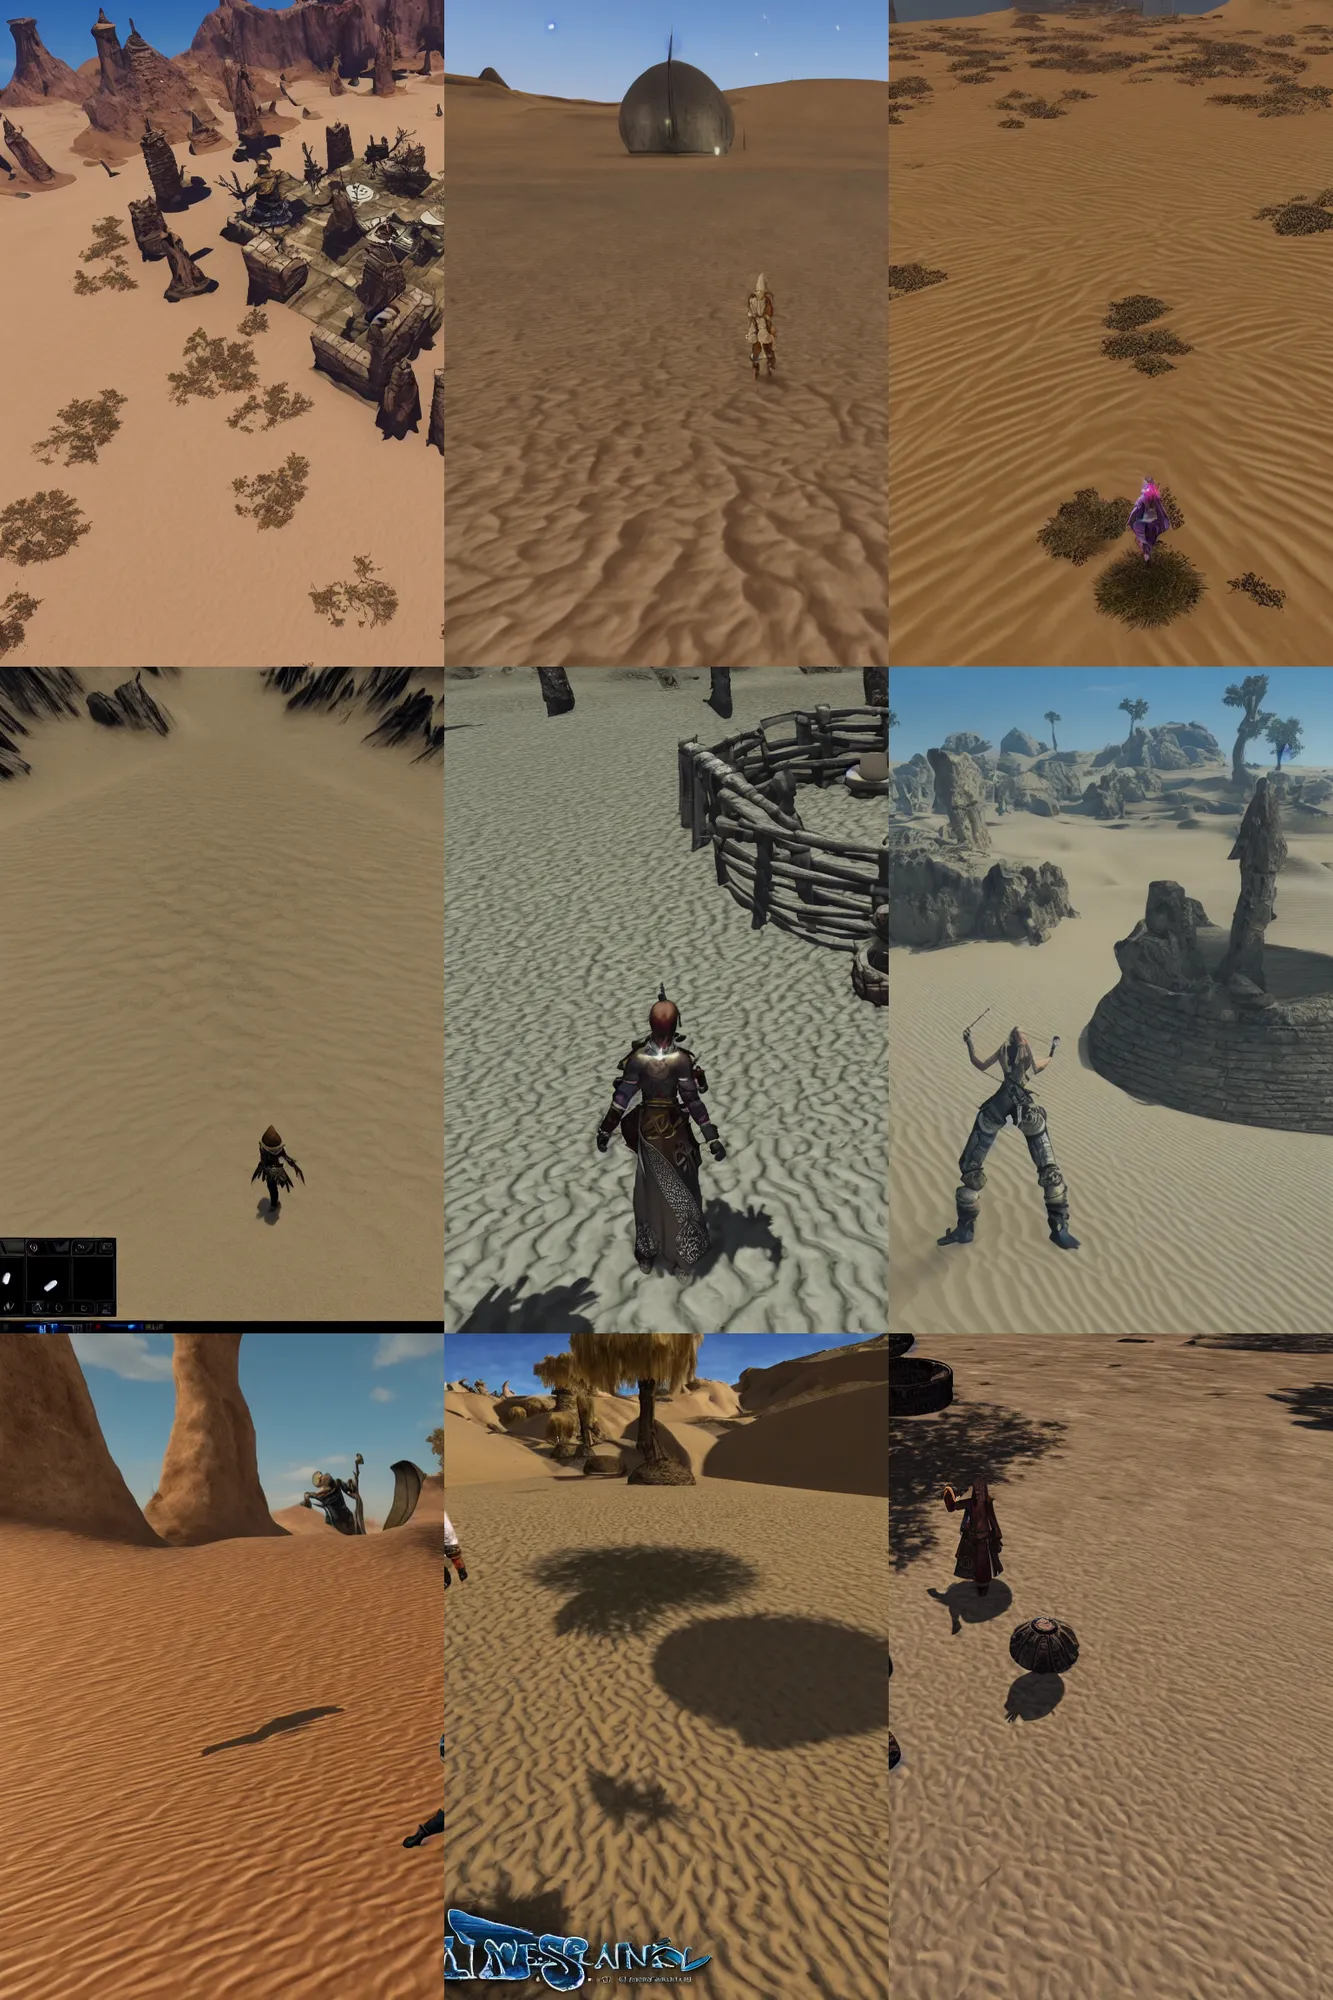 Prompt: gameplay walkthrough 3 rd person adventure game spiritual alien village in oasis of a vast flat empty sand desert with dunes, screenshot, final fantasy, square enix, jrpg, unreal engine